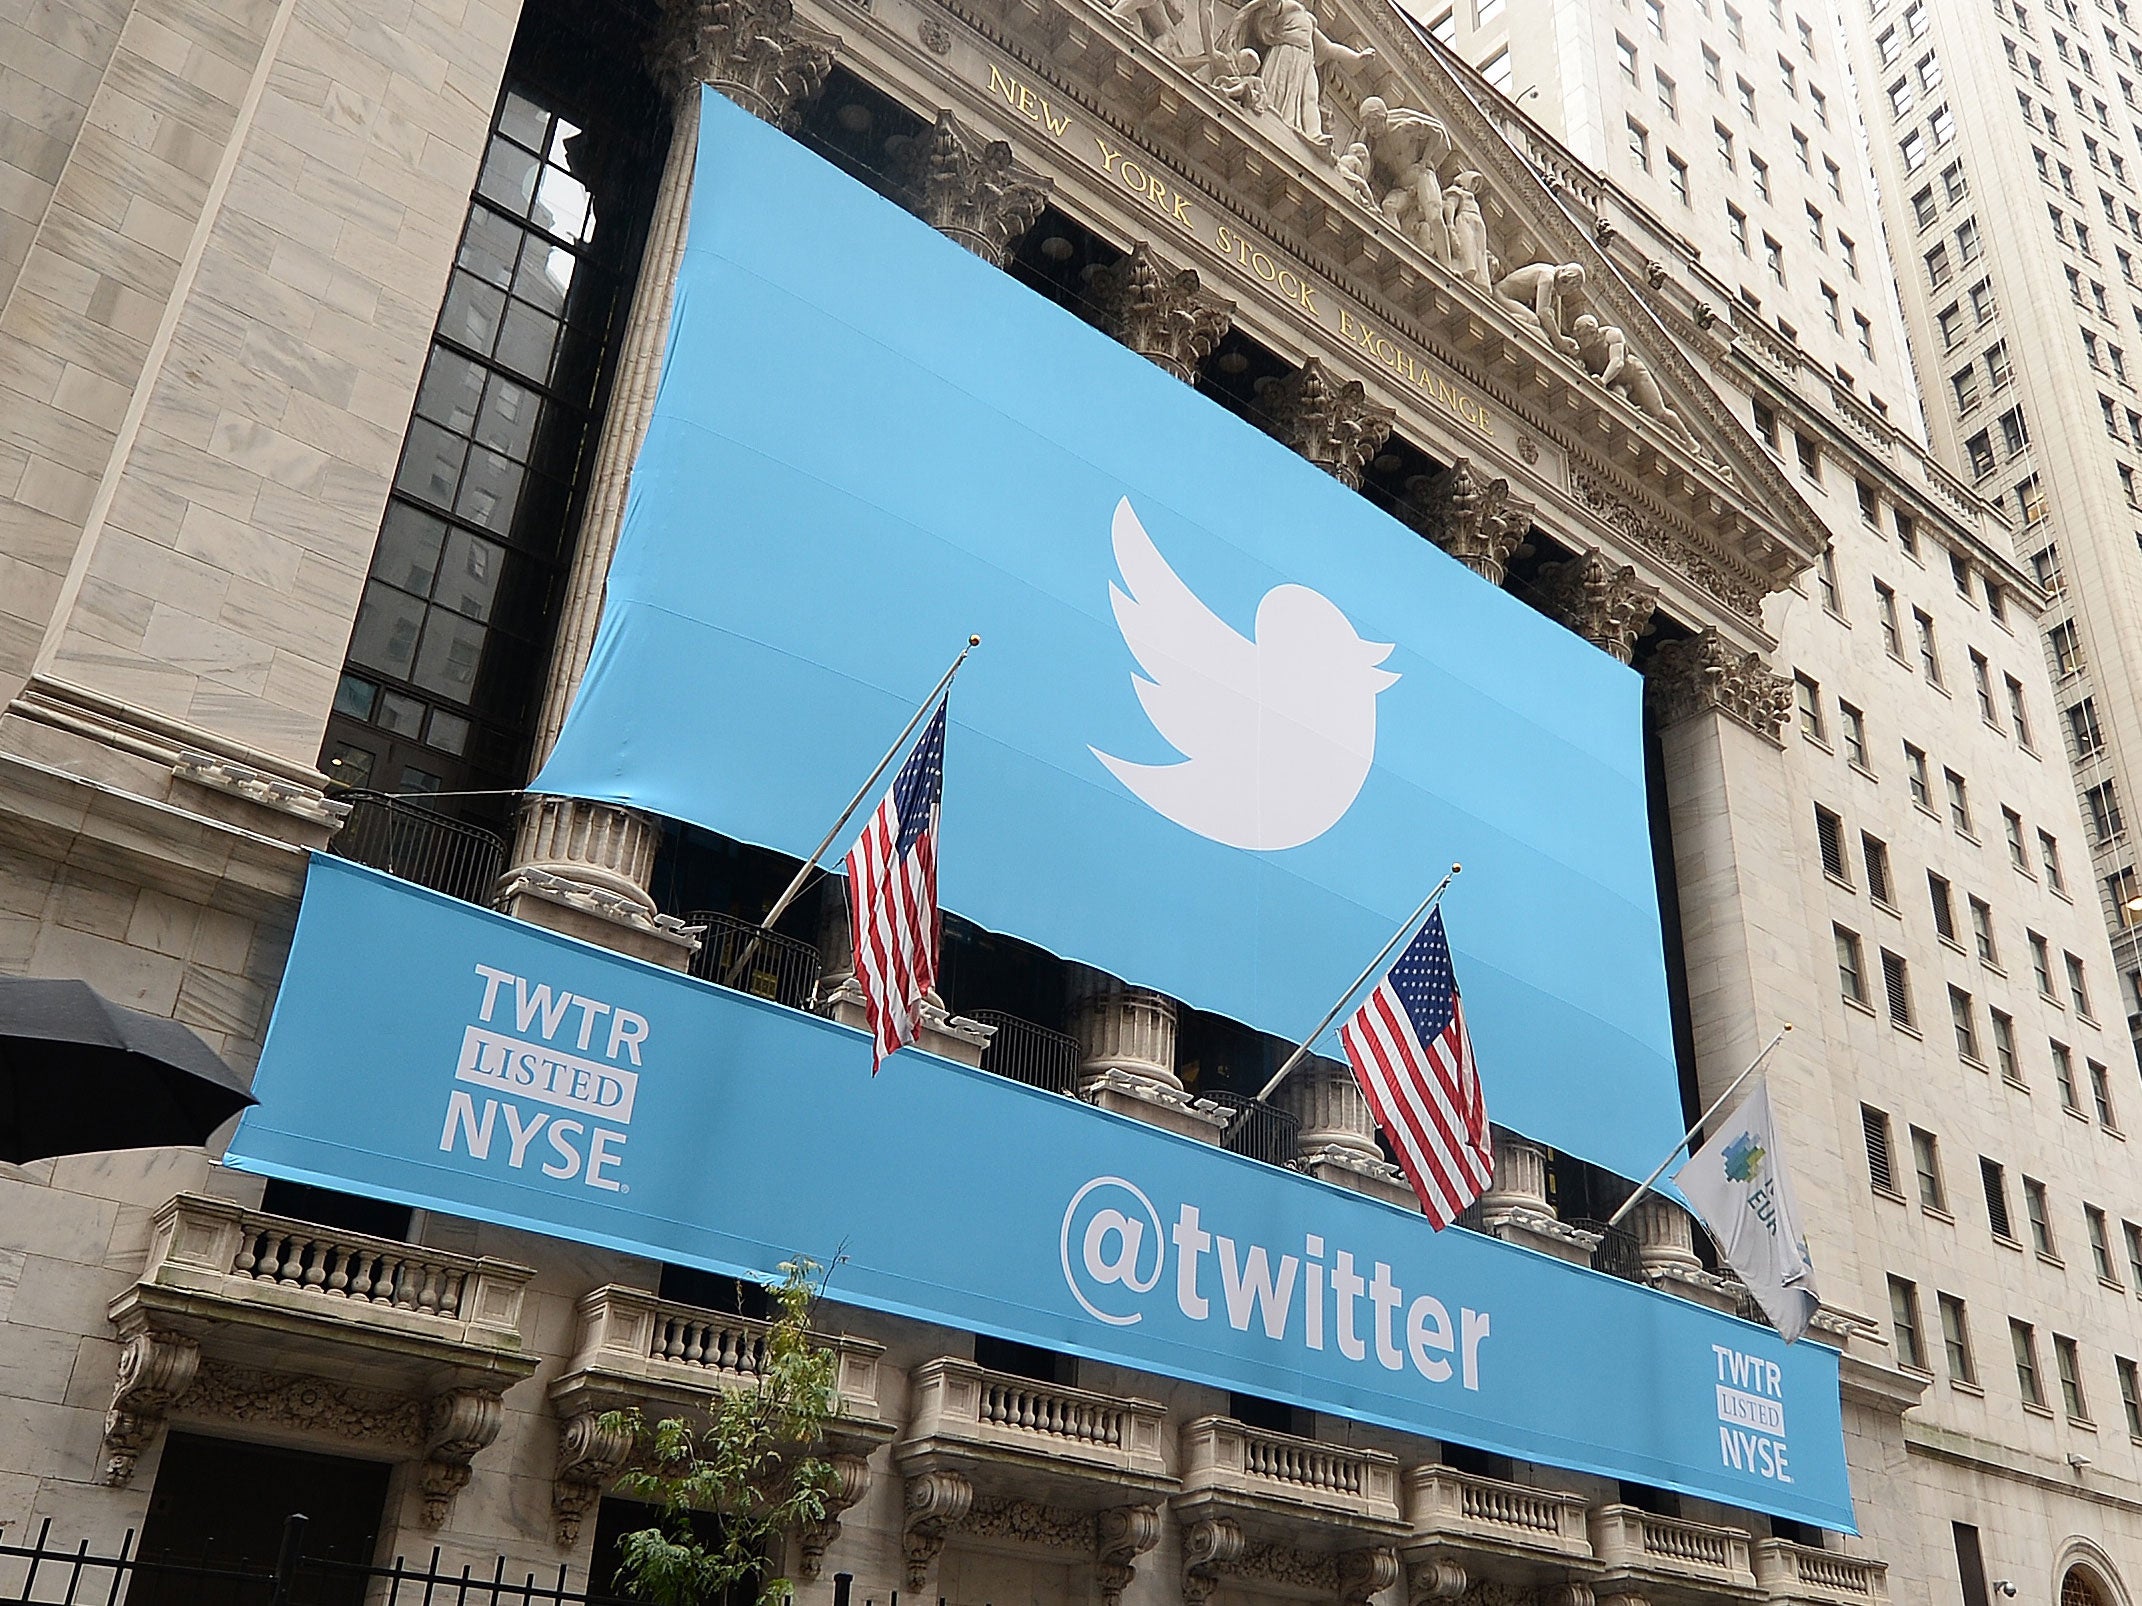 Twitter's 10th birthday has been met with celebrations online